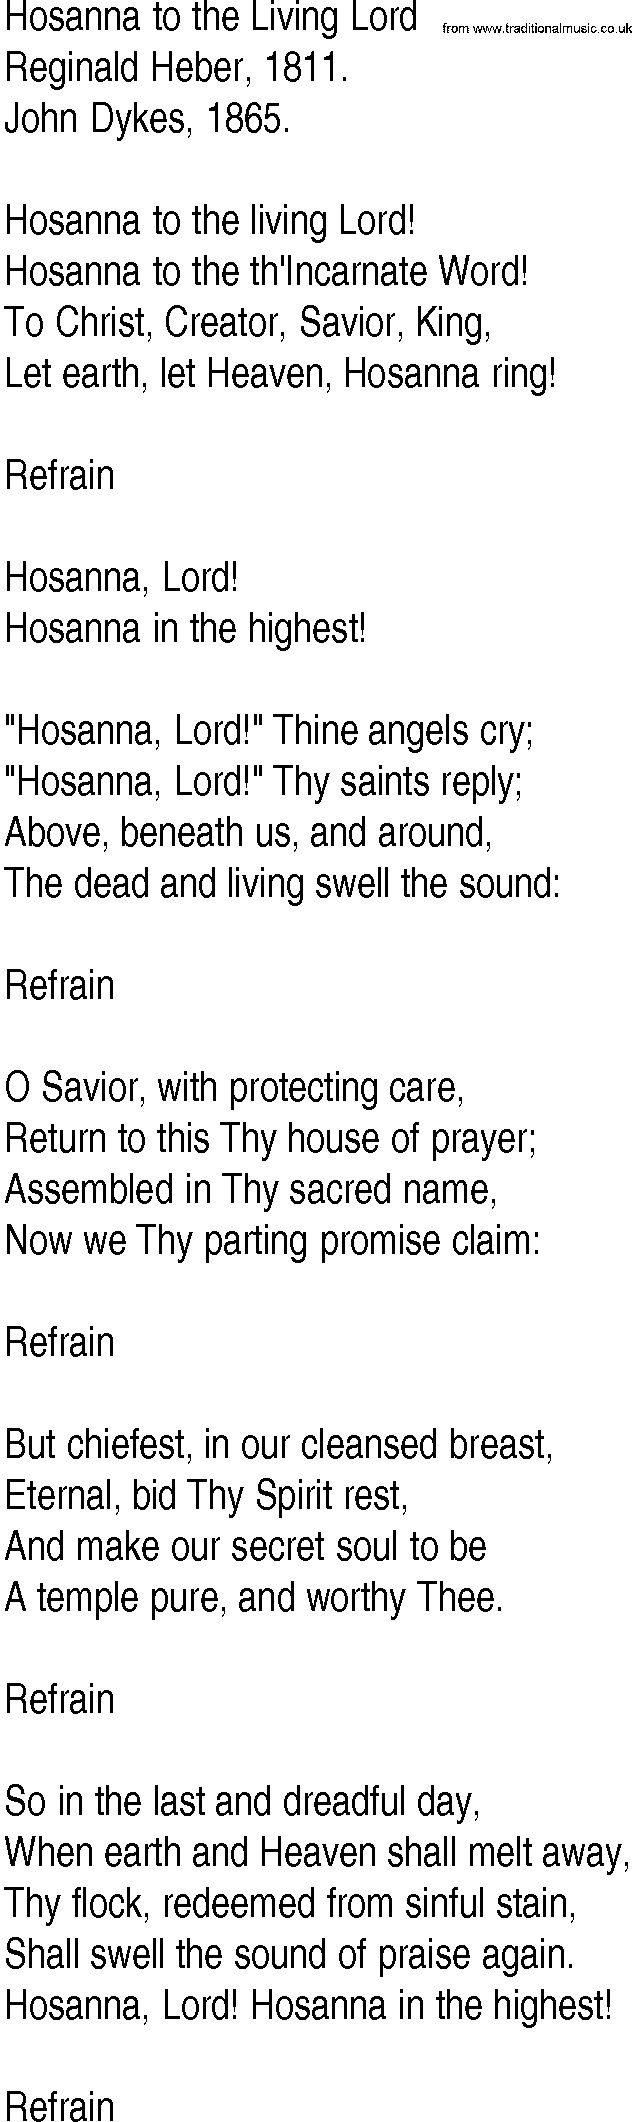 Hymn and Gospel Song: Hosanna to the Living Lord by Reginald Heber lyrics